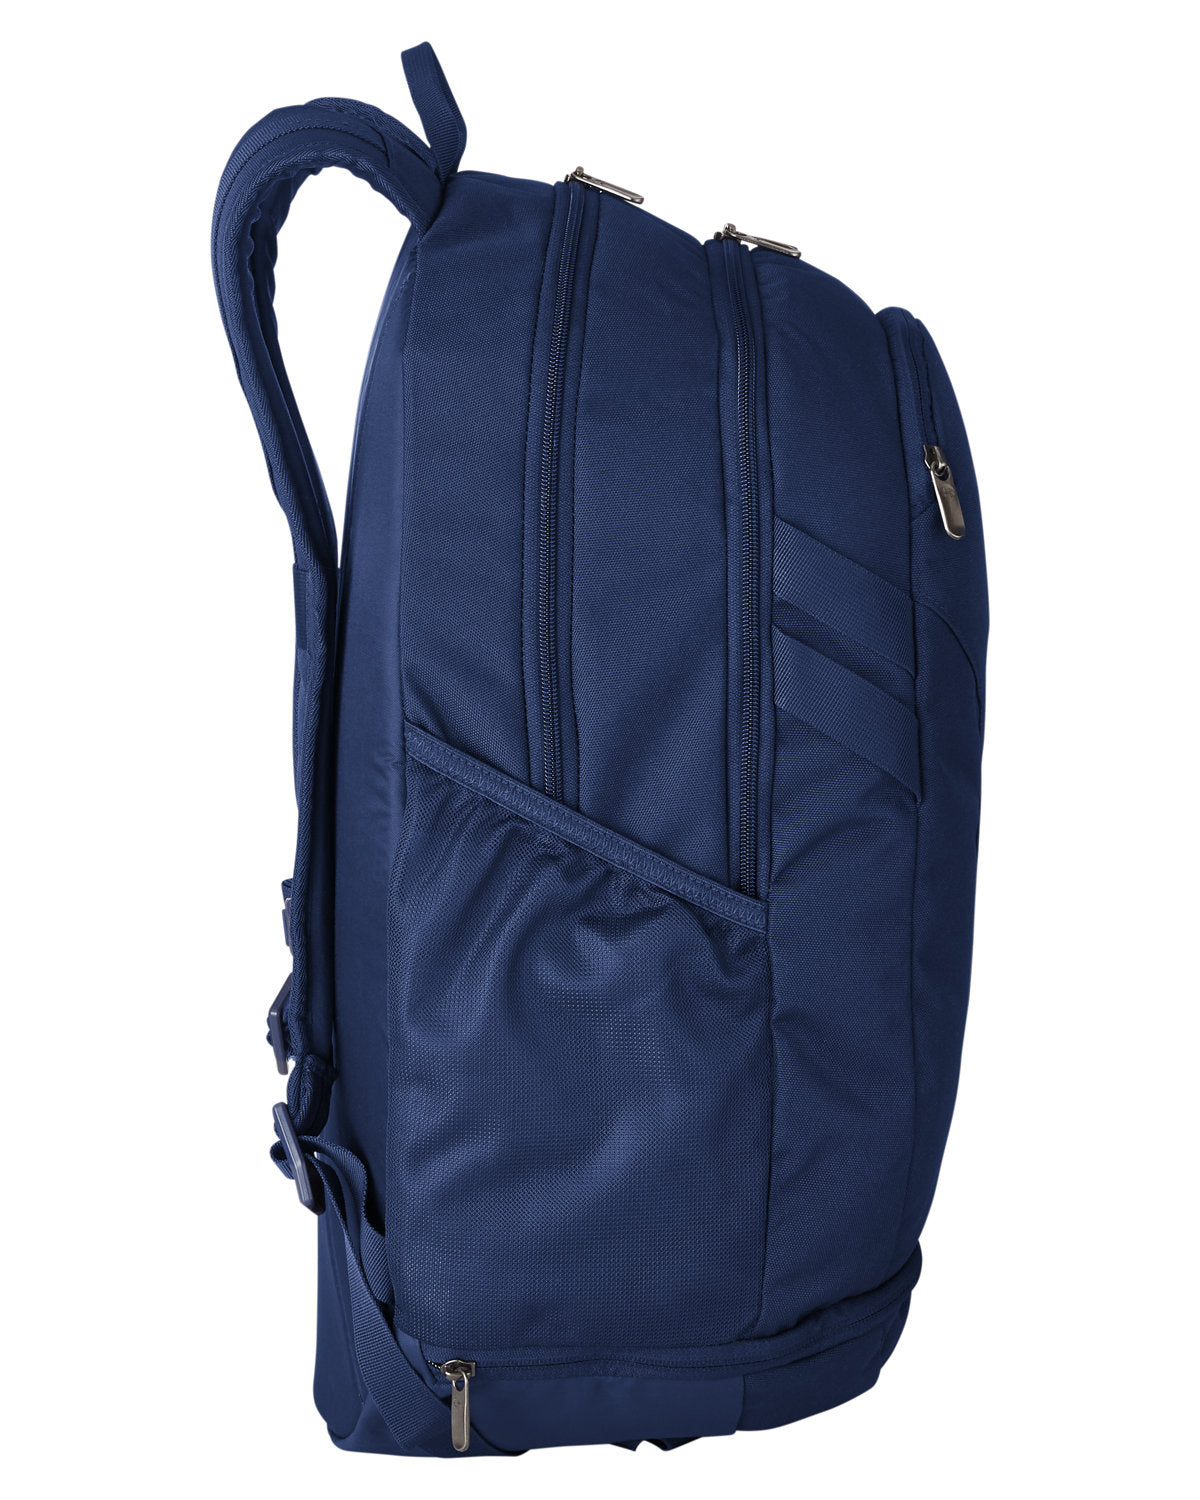 Under Armour Hustle Team Branded Backpacks, Midnght Navy